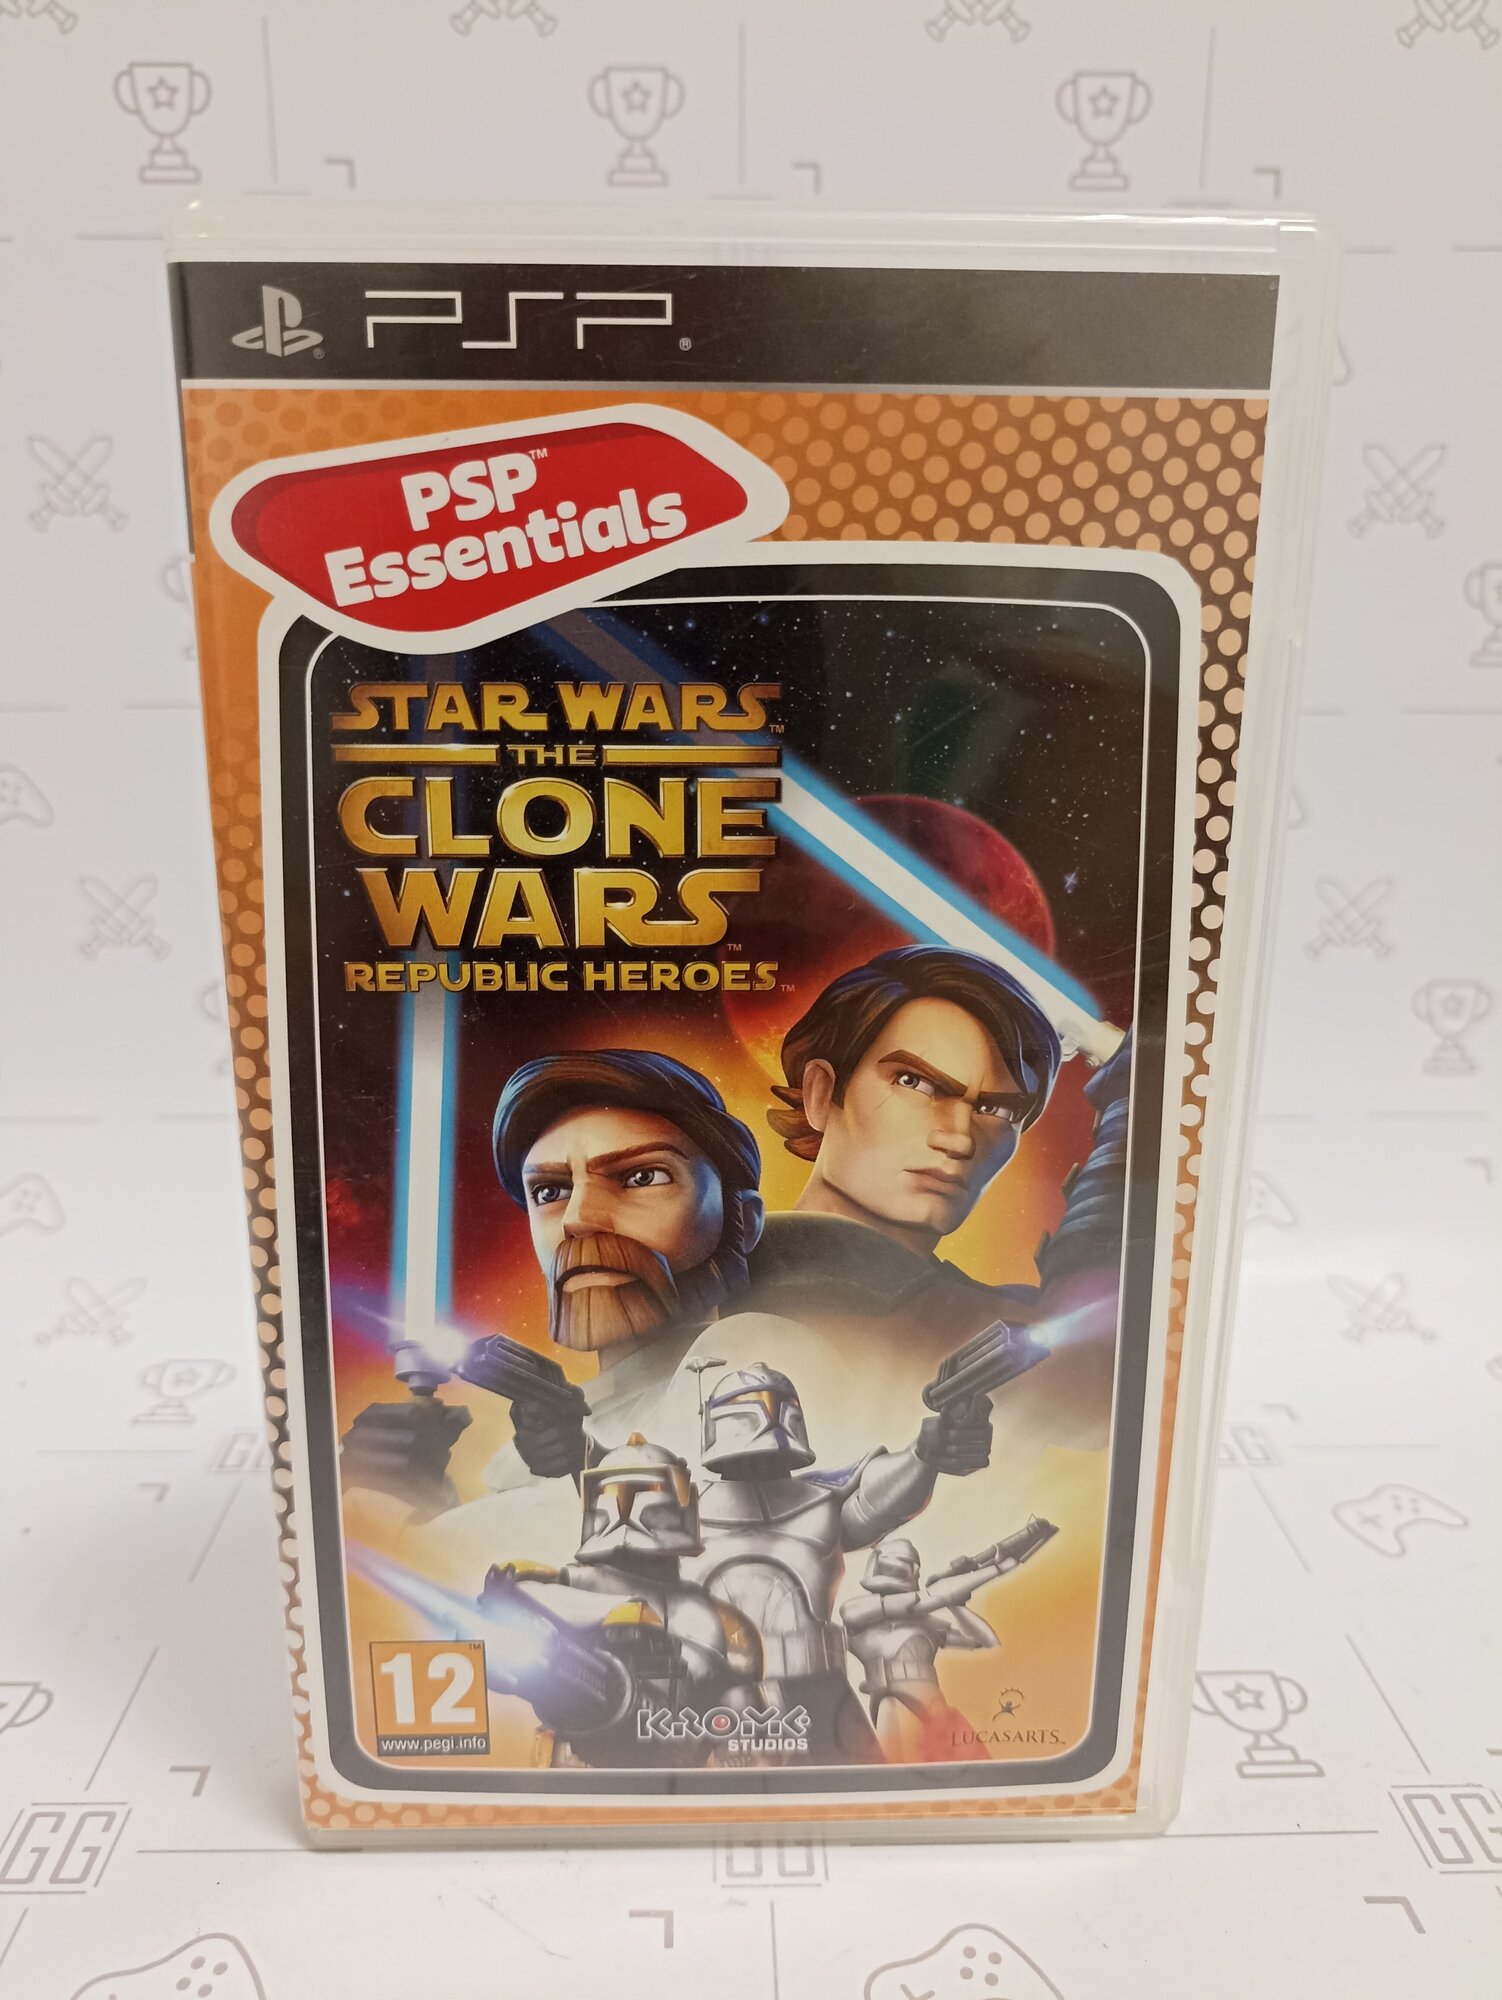 Star Wars The Clone Wars Republic Heroes (PSP, Английский язык)